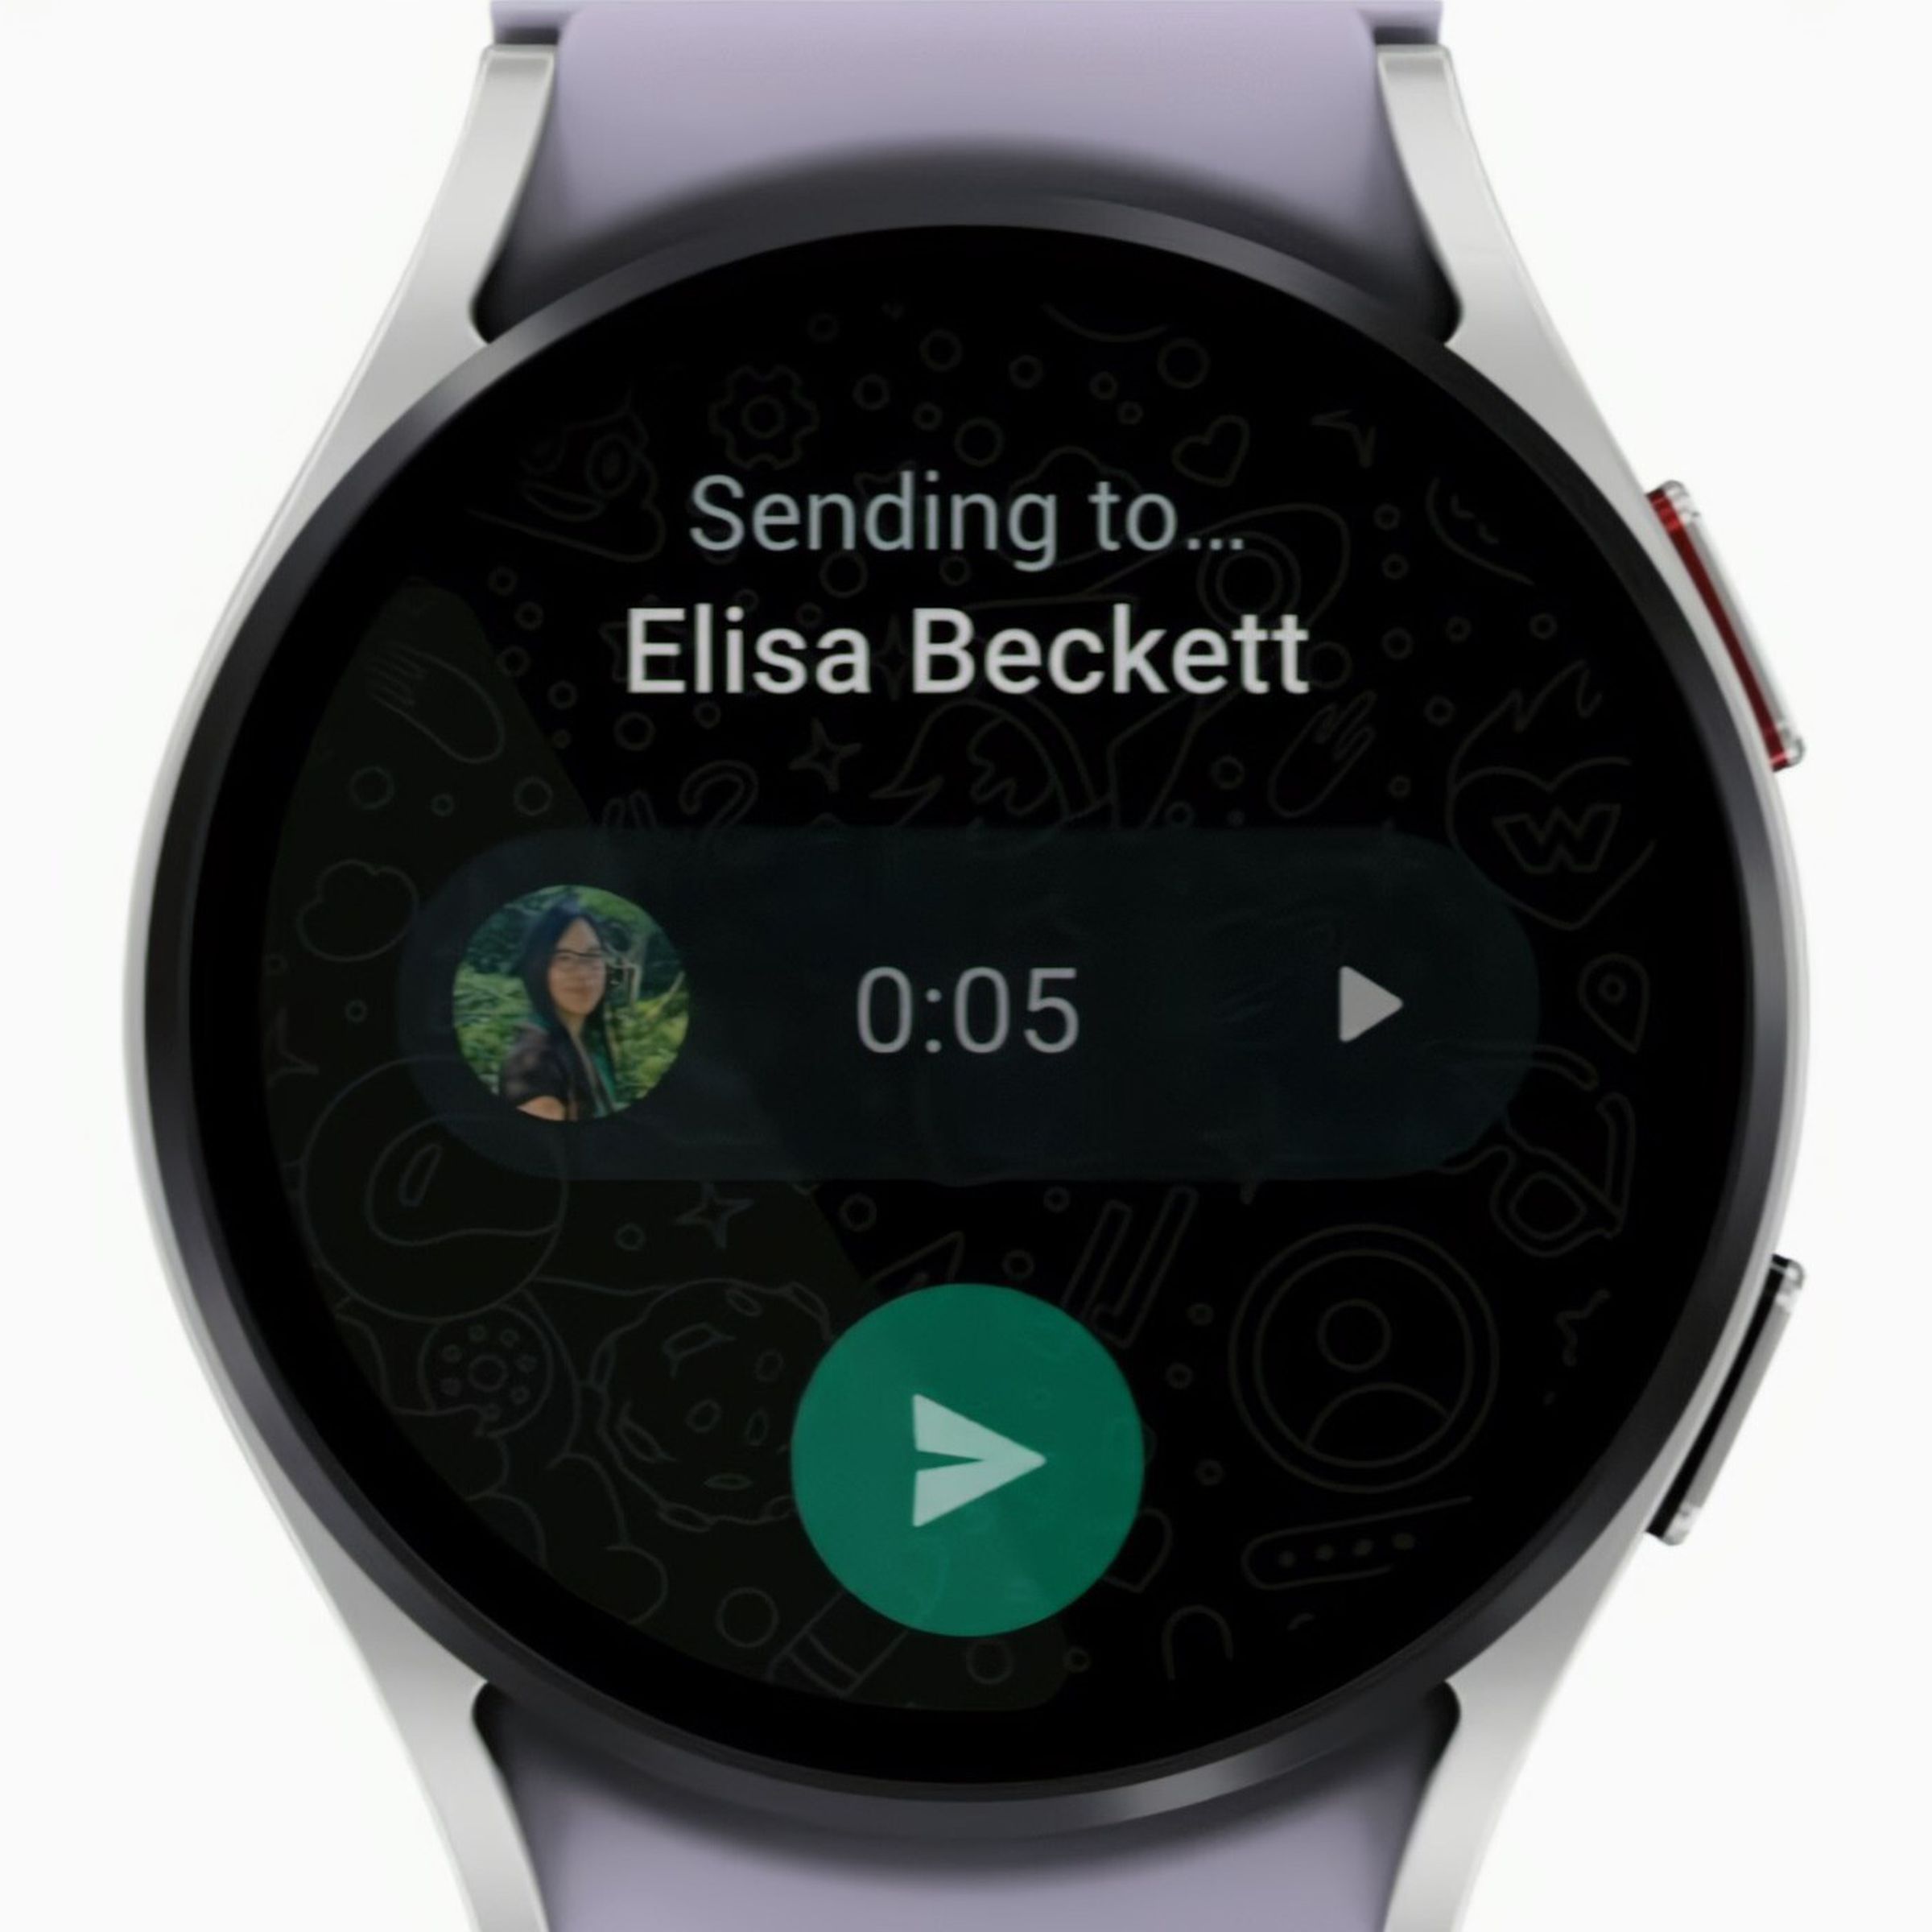 Screenshot of Google I/O introducing WhatsApp on a Wear OS watch.